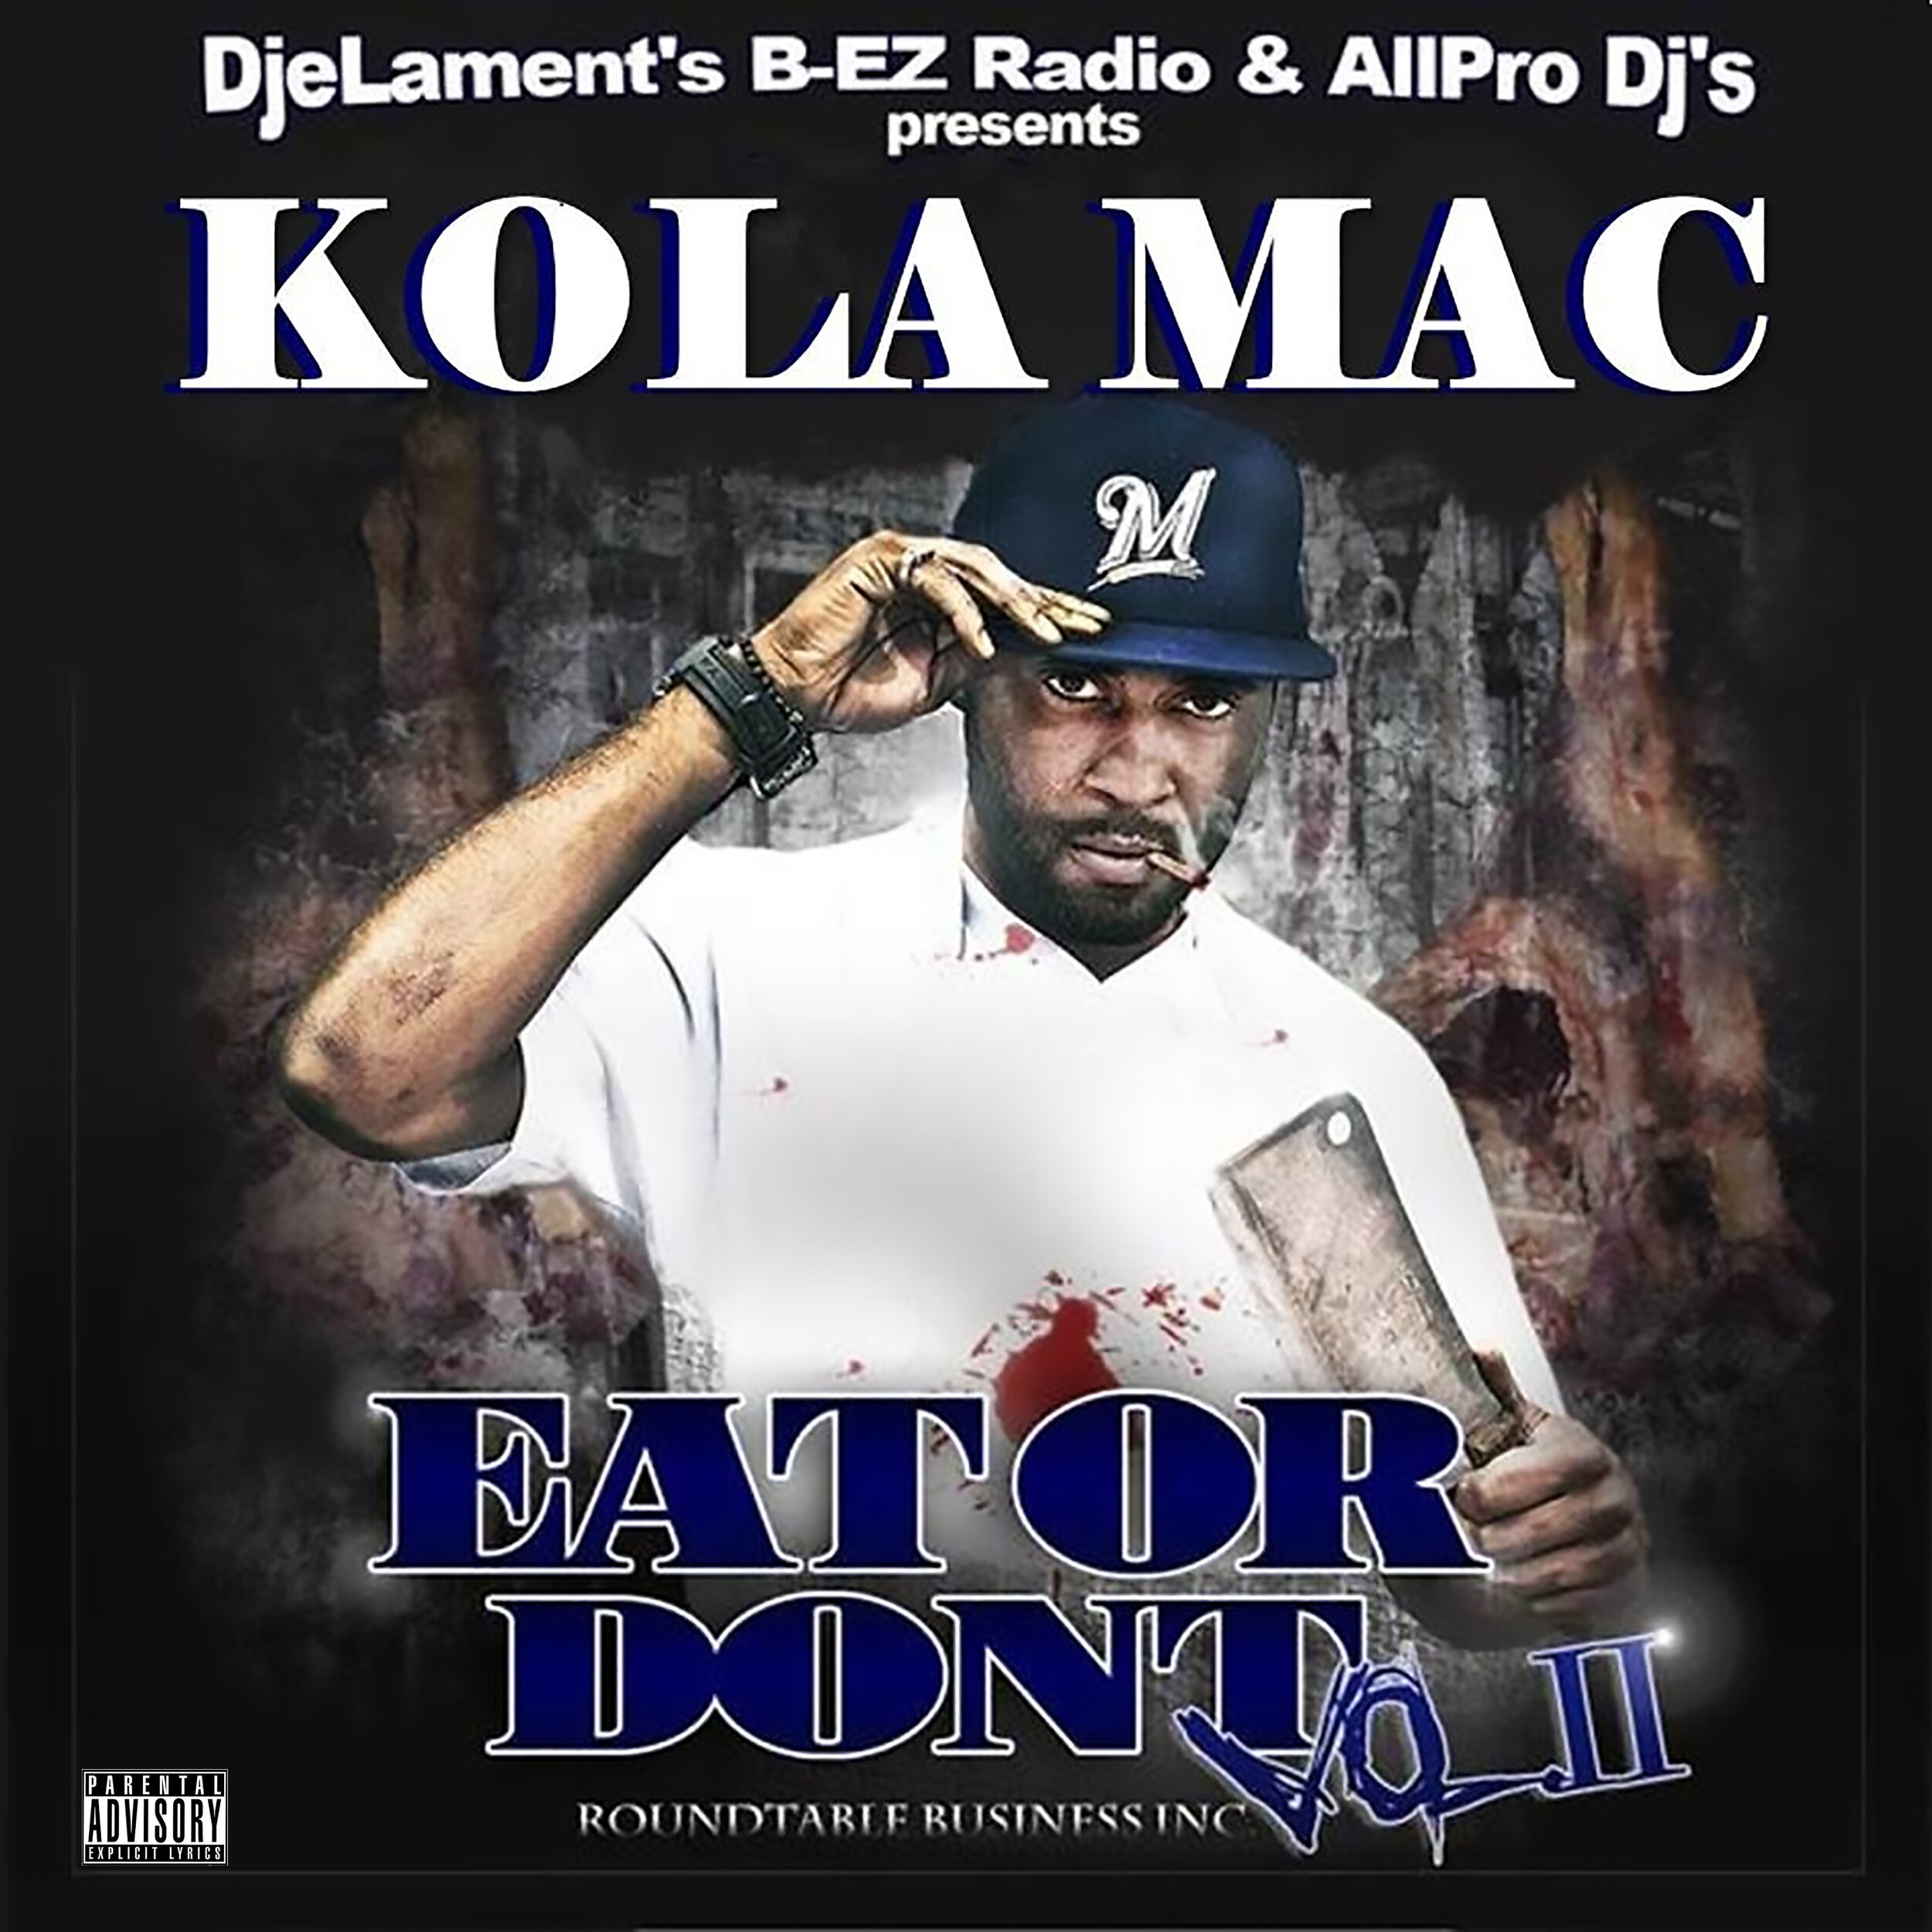 Kola Mac Eat or Dont Vol II - Album Cover.jpg